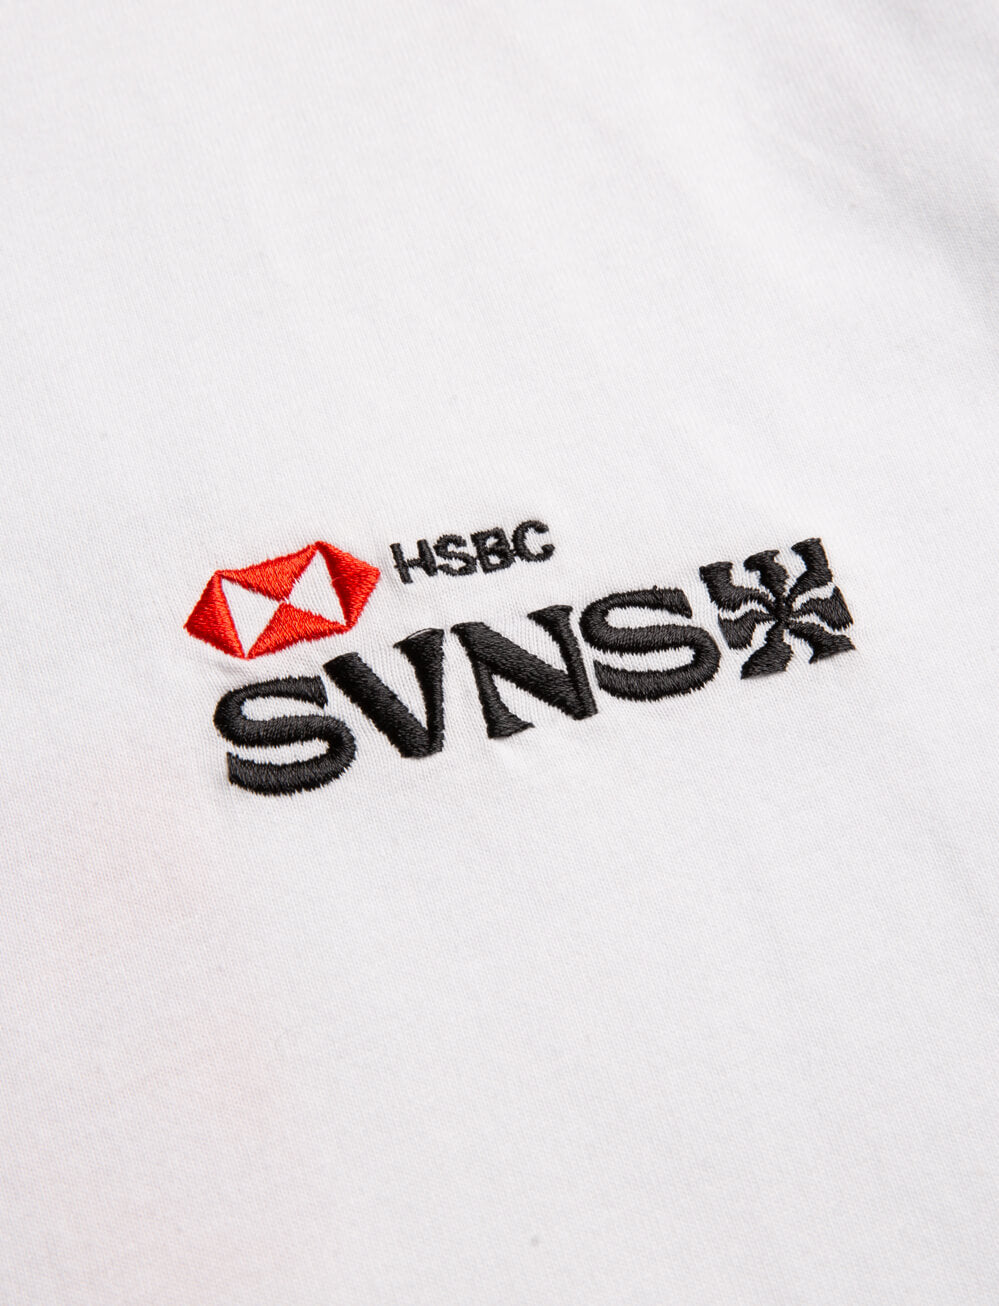 SVNS Singapore Global Tour T-Shirt - White